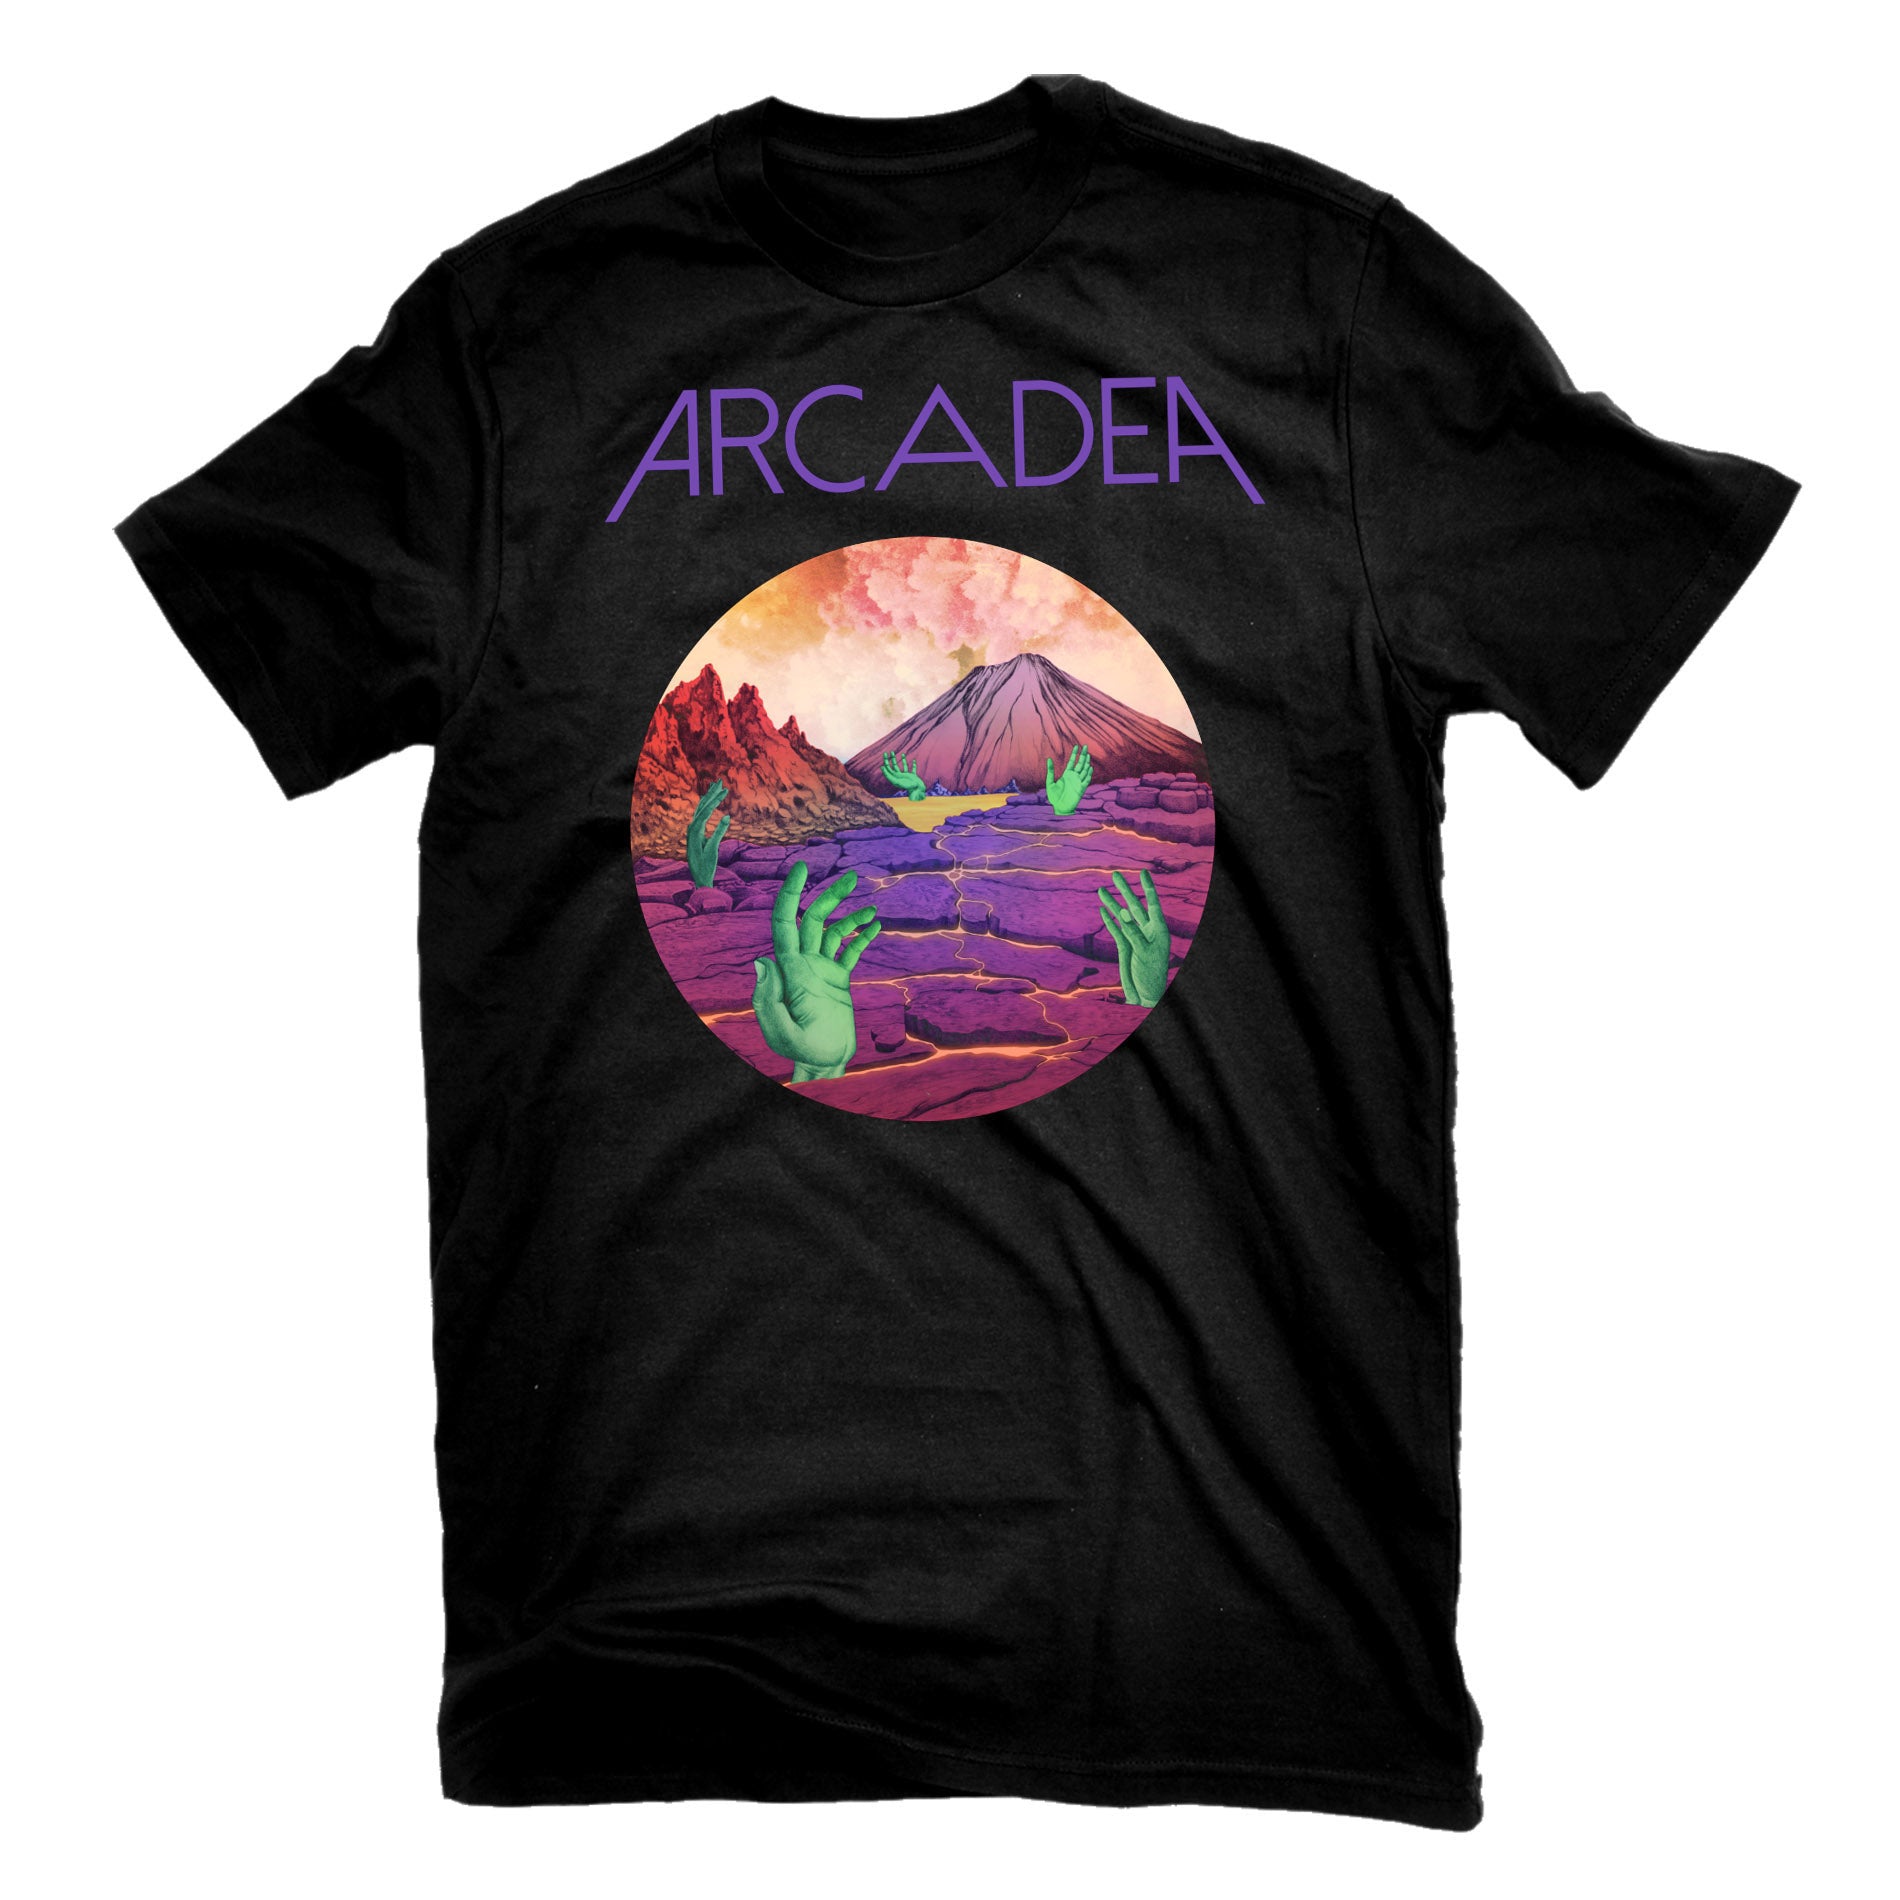 Arcadea "Arcadea" T-Shirt